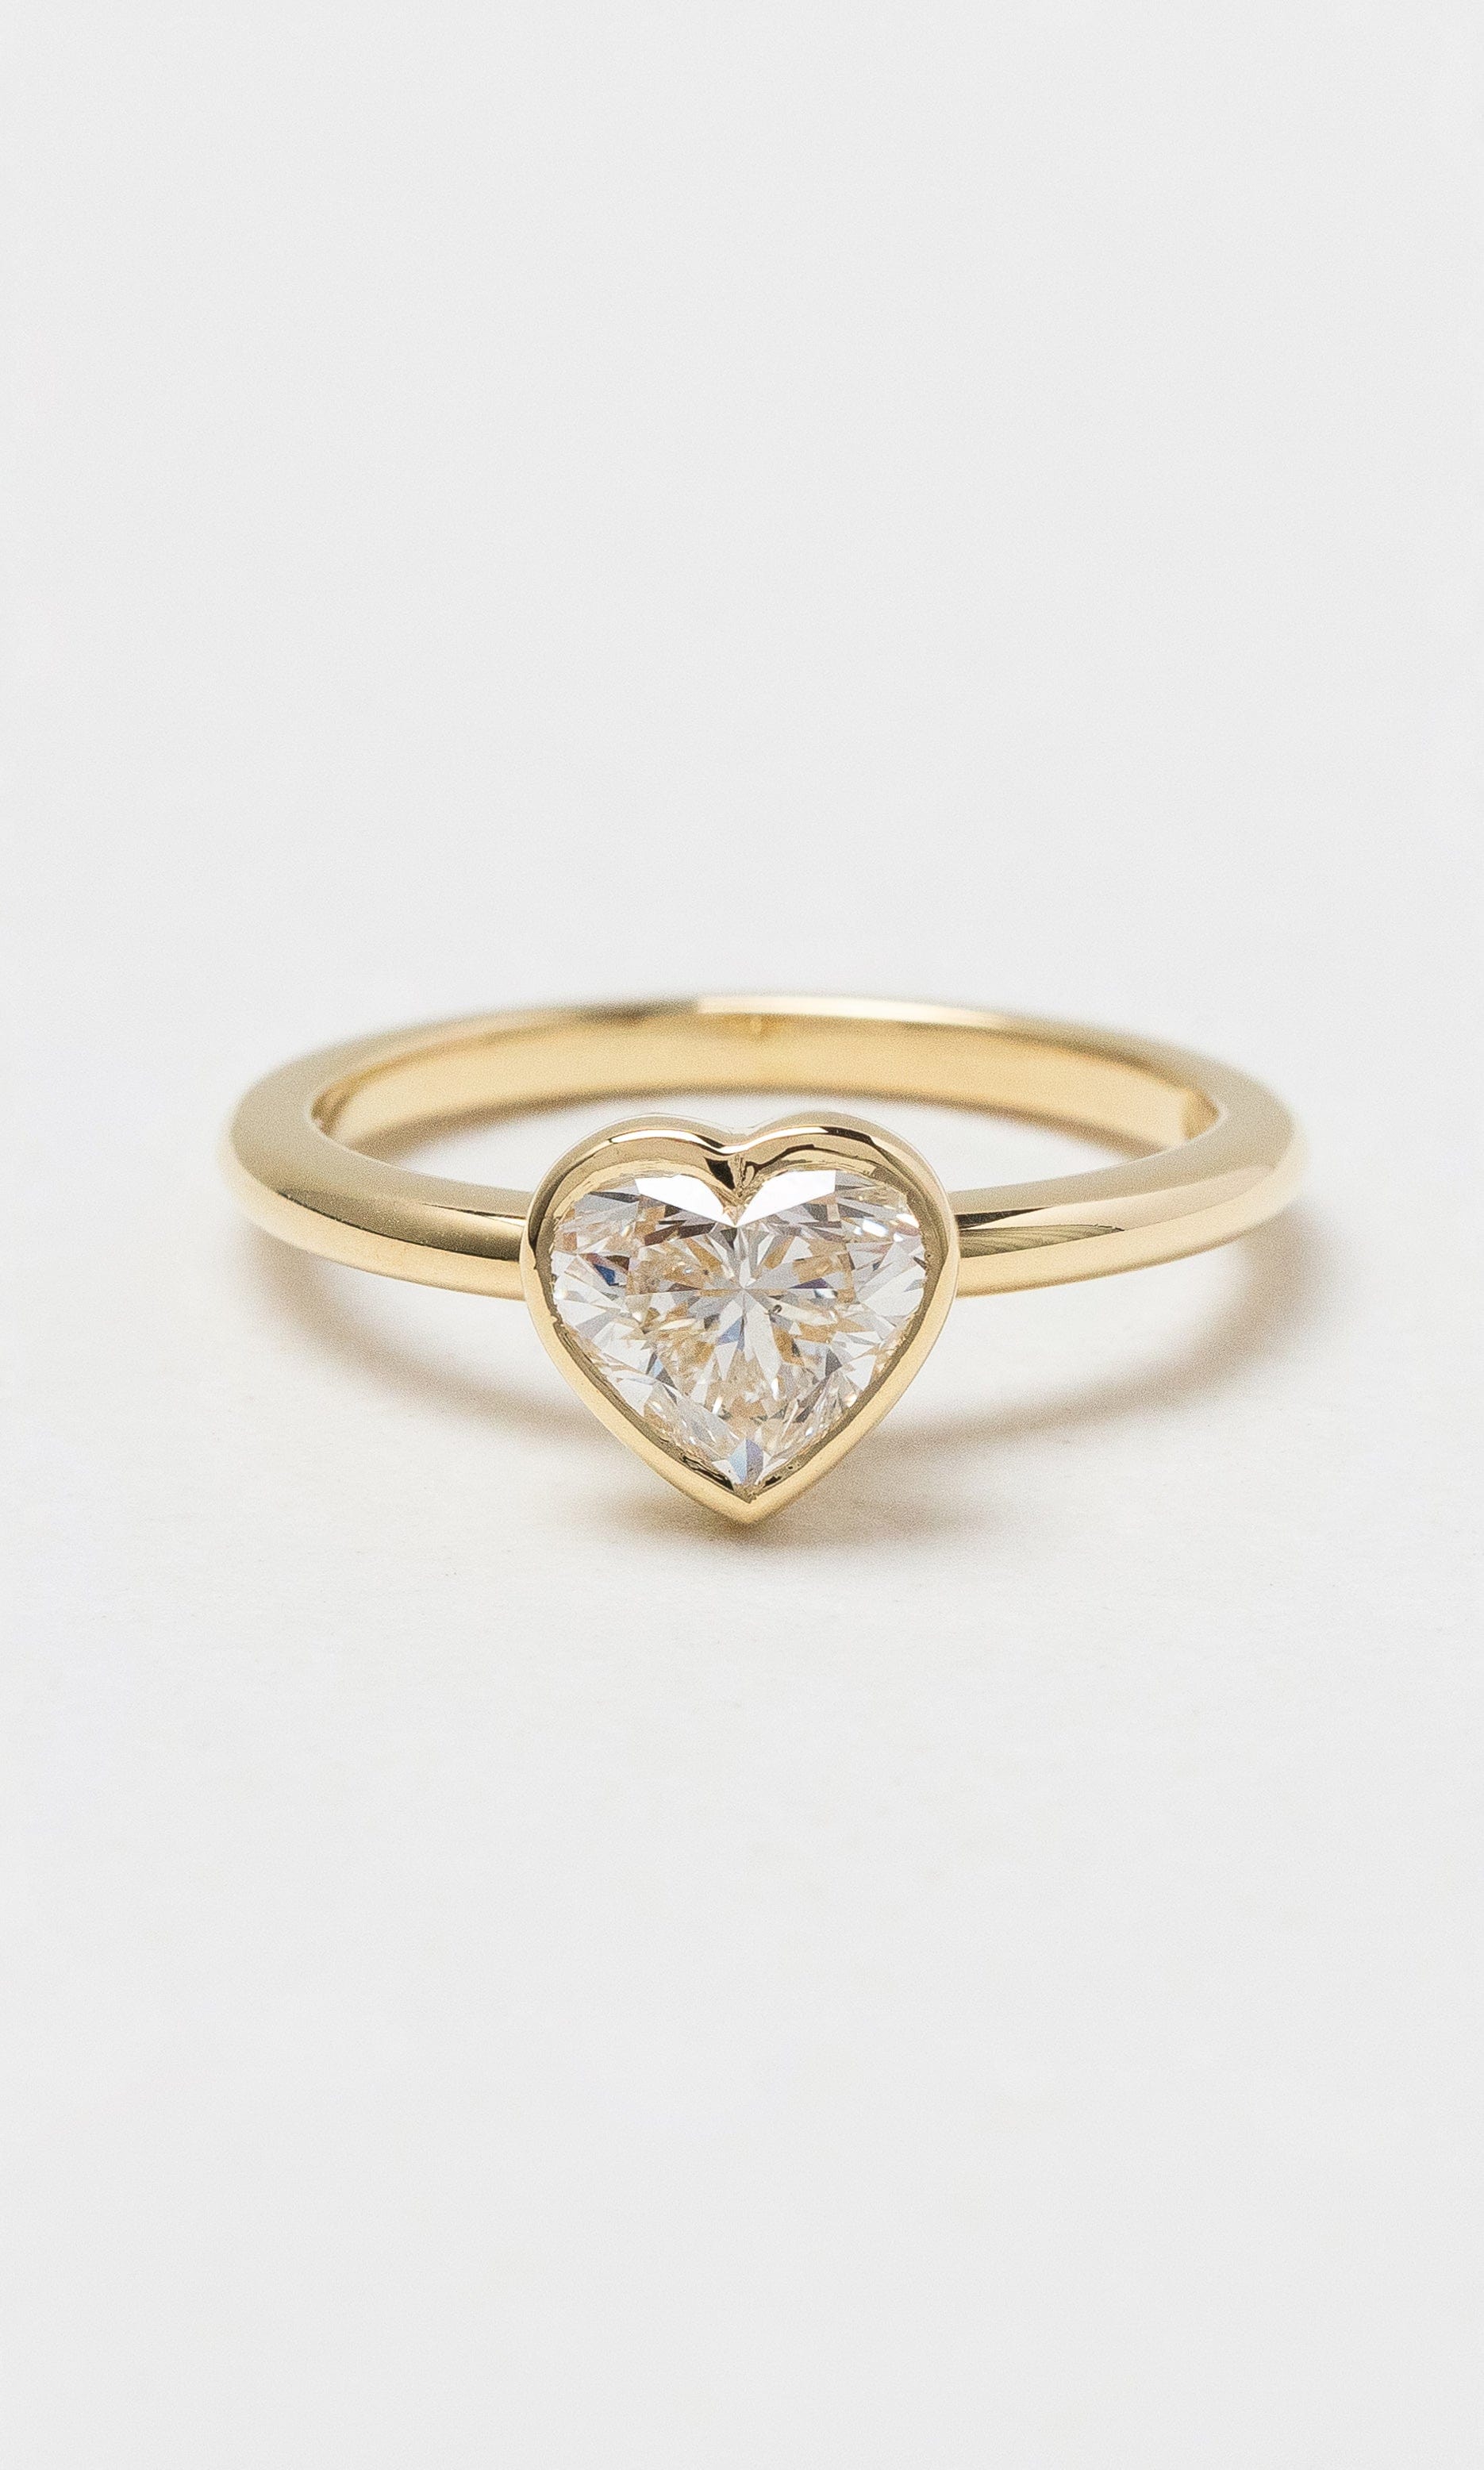 2024 © Hogans Family Jewellers 18K YG Heart Shaped Diamond Solitaire Ring